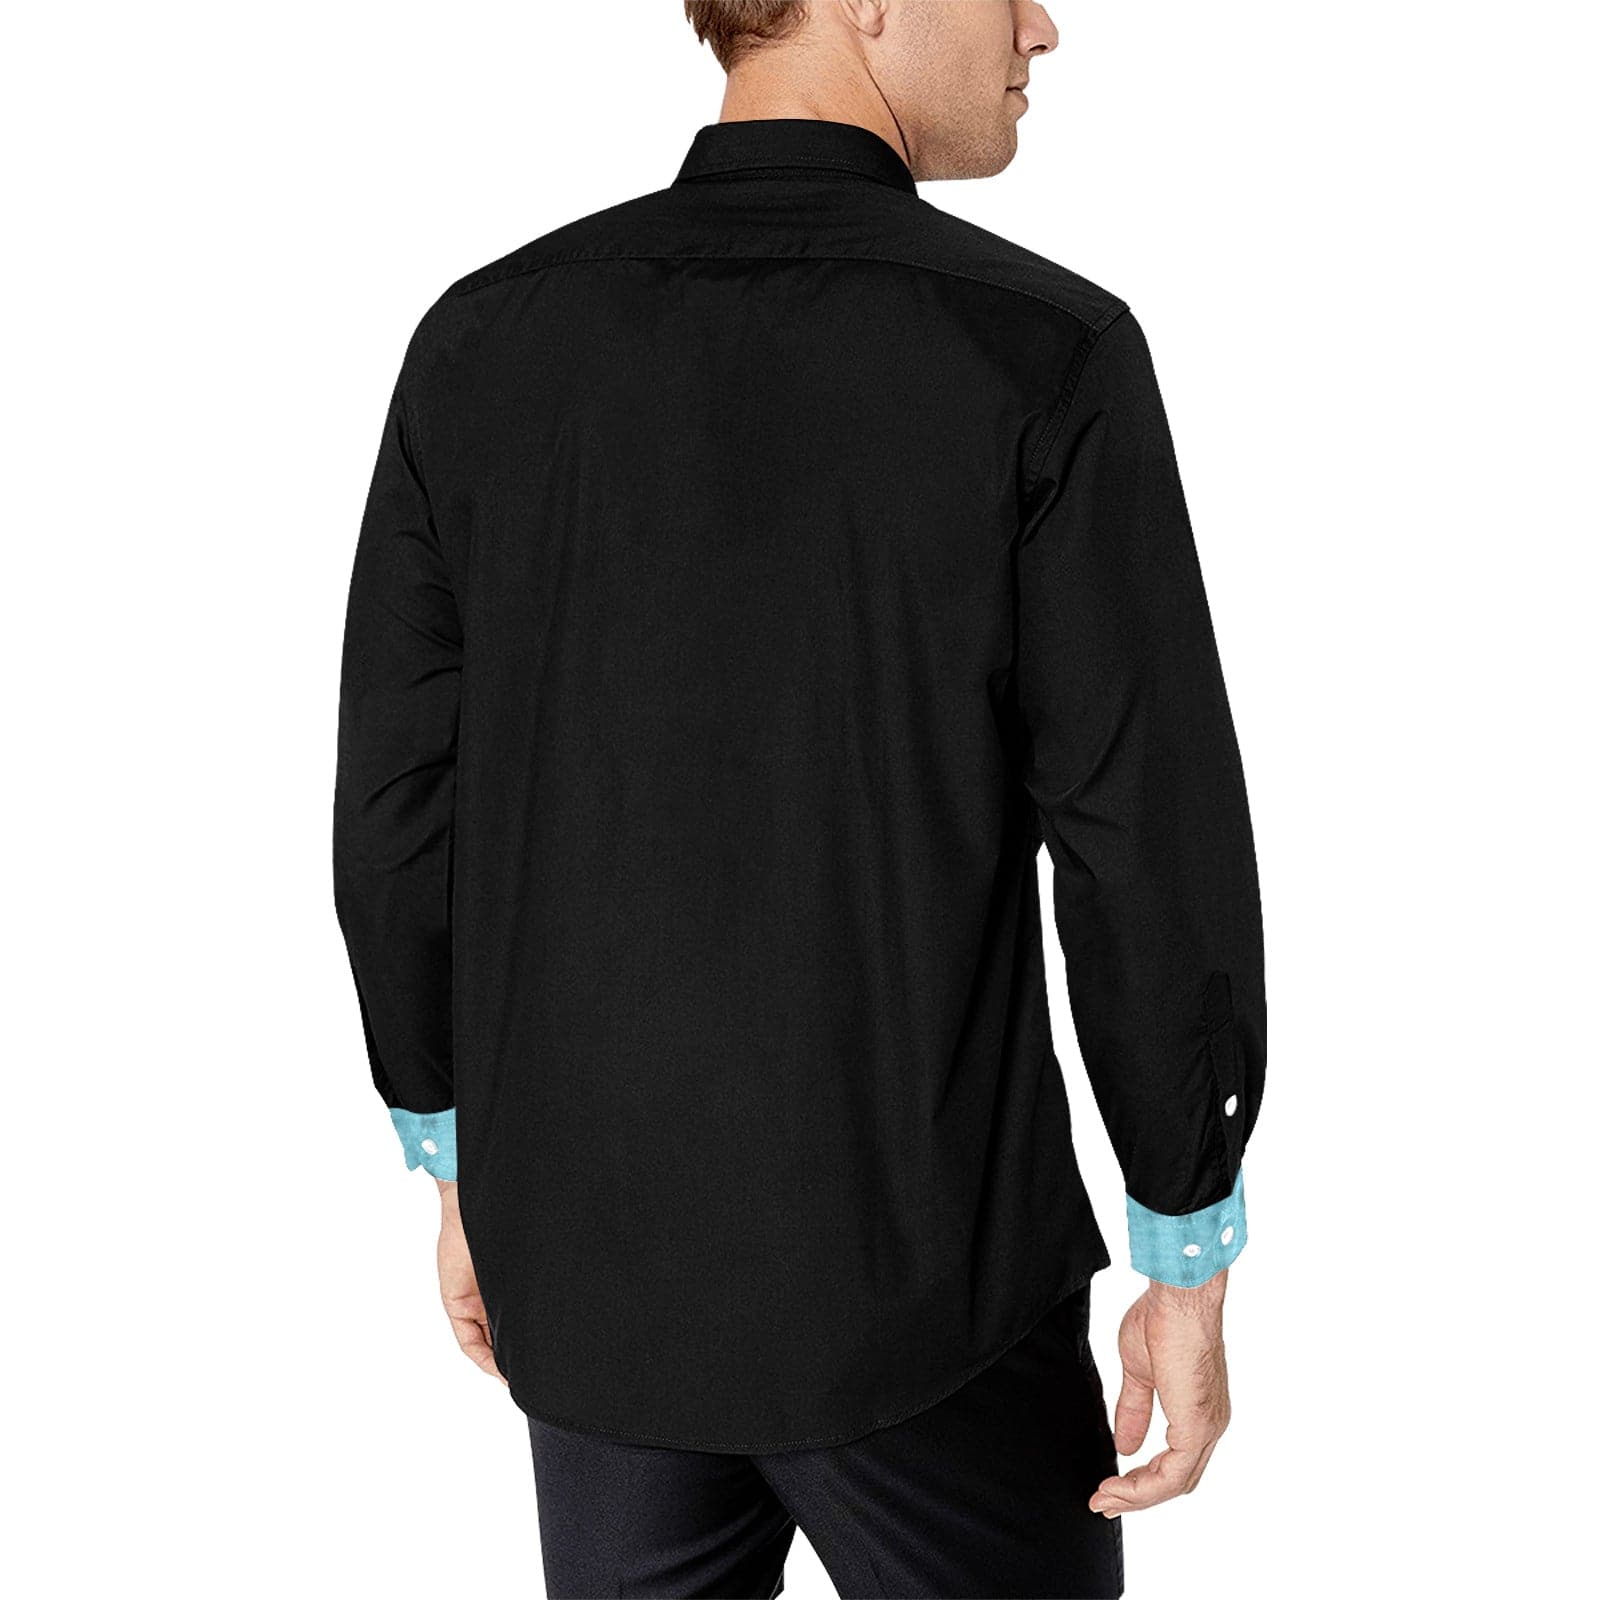 Black and Light Blue Line Patterned Easy Fit Longsleeve Shirt for Men Long Sleeve Shirt (Without Pocket)